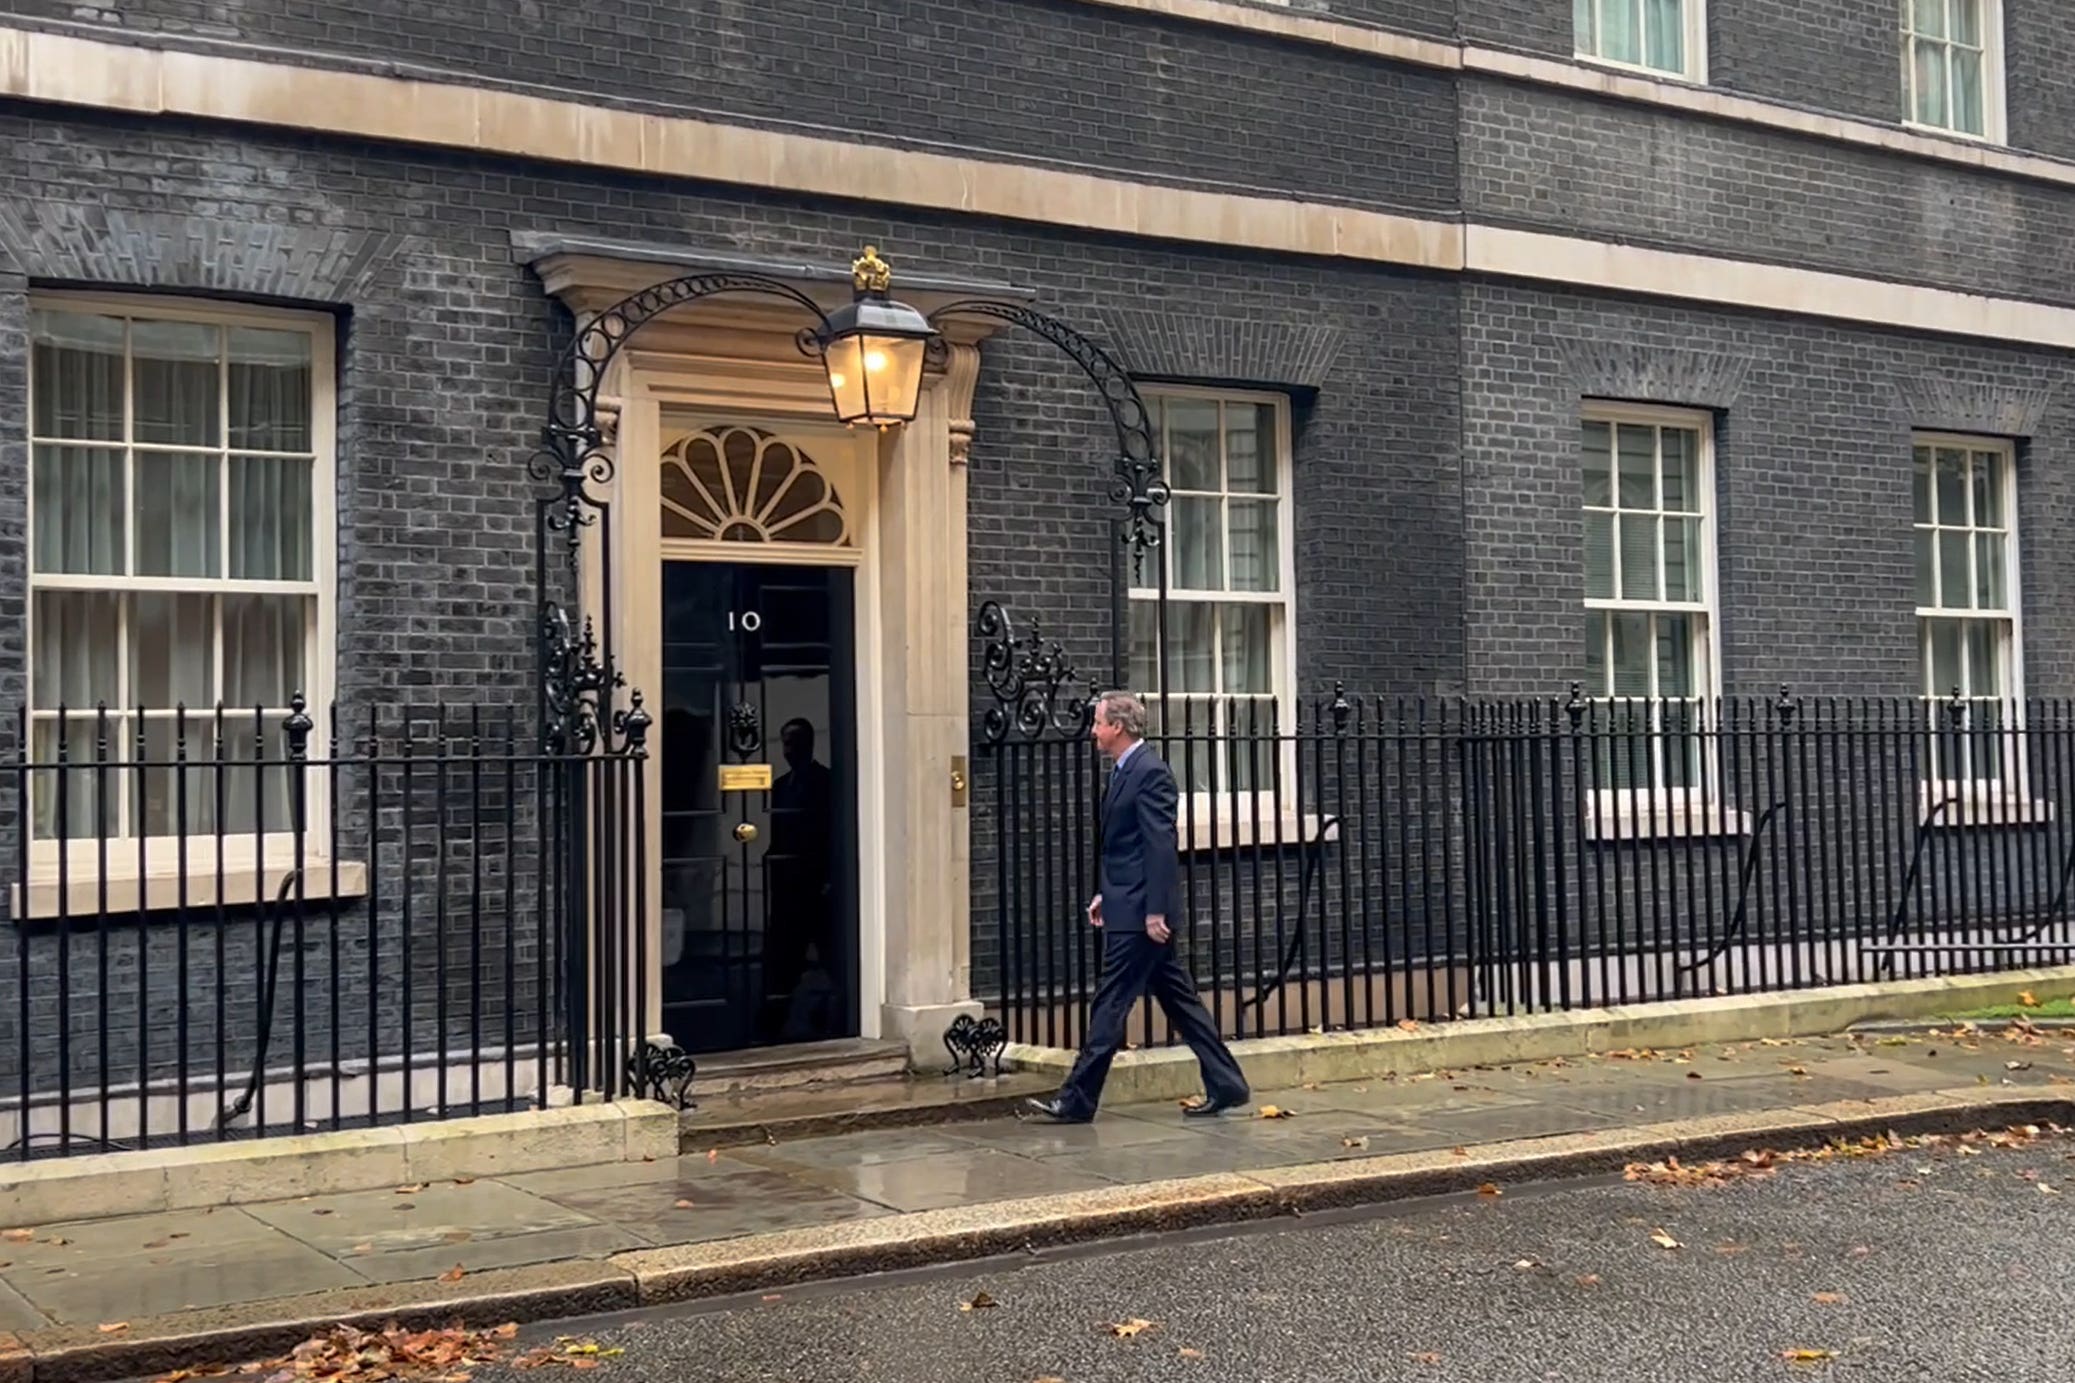 David Cameron makes his dramatic return to Downing Street on Monday